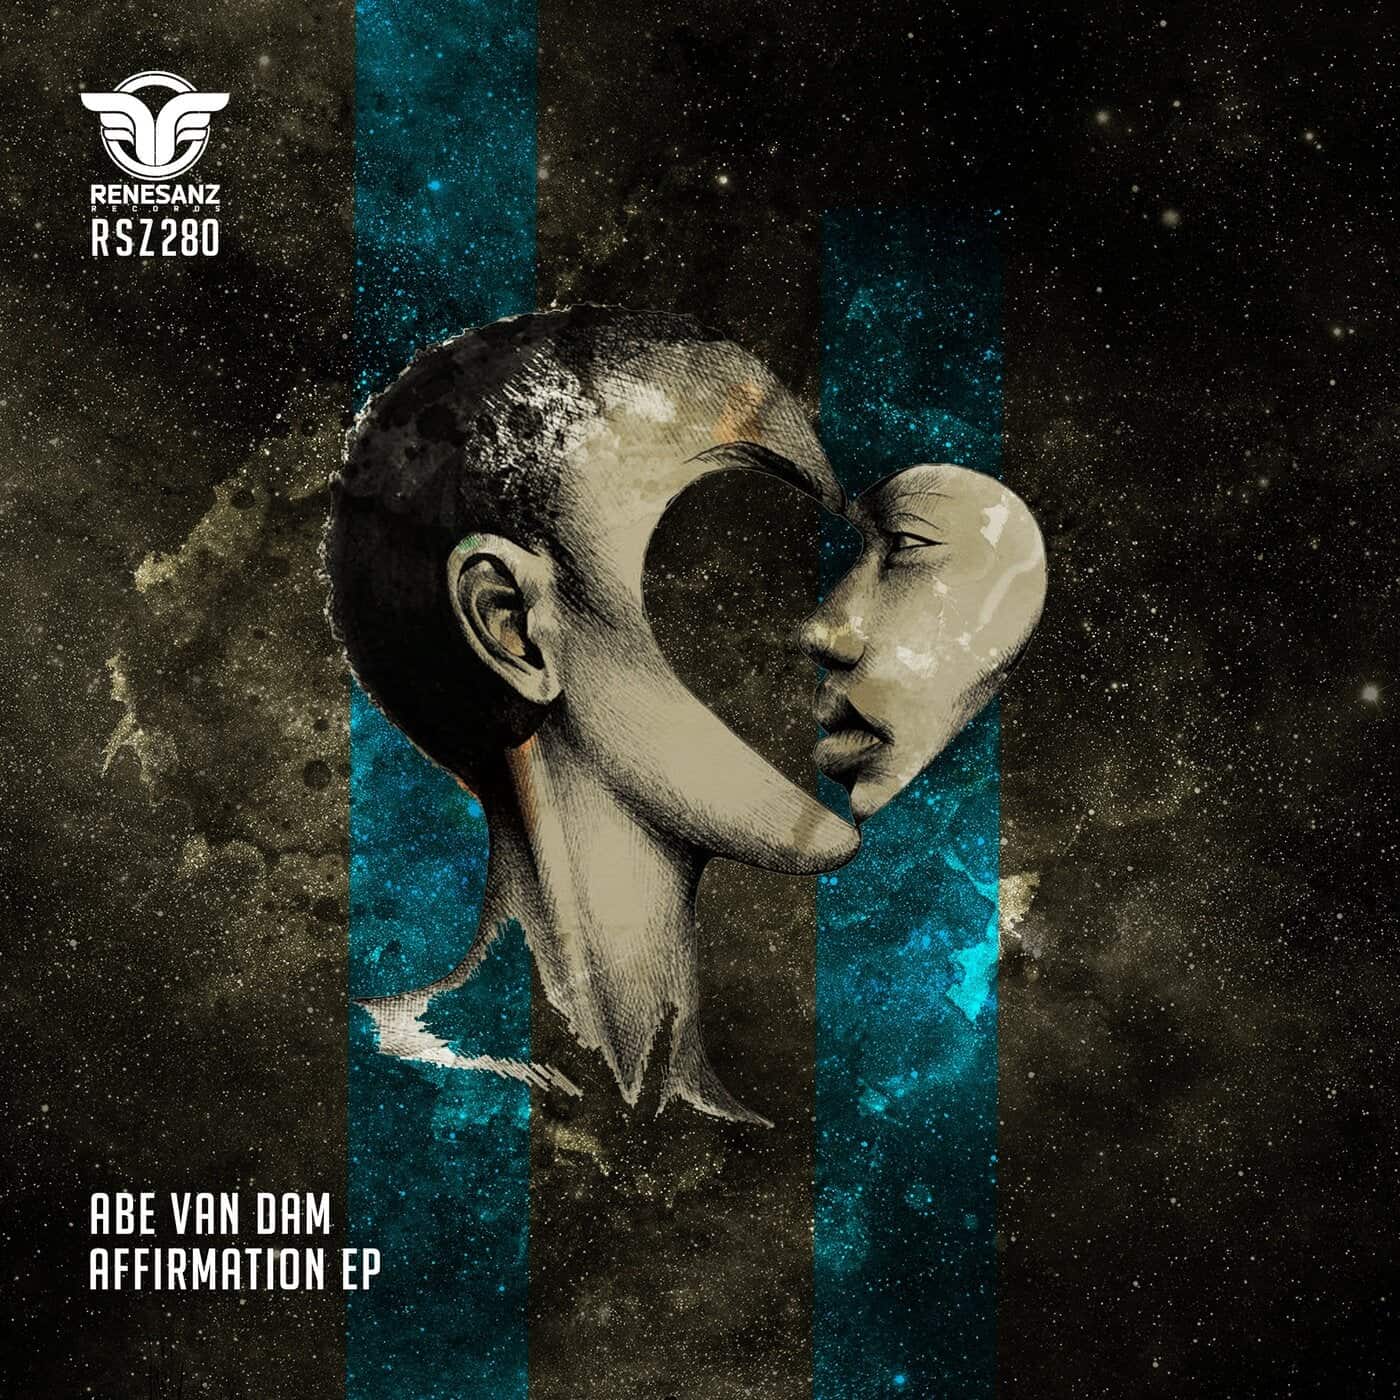 Download Abe Van Dam - Affirmation EP on Electrobuzz